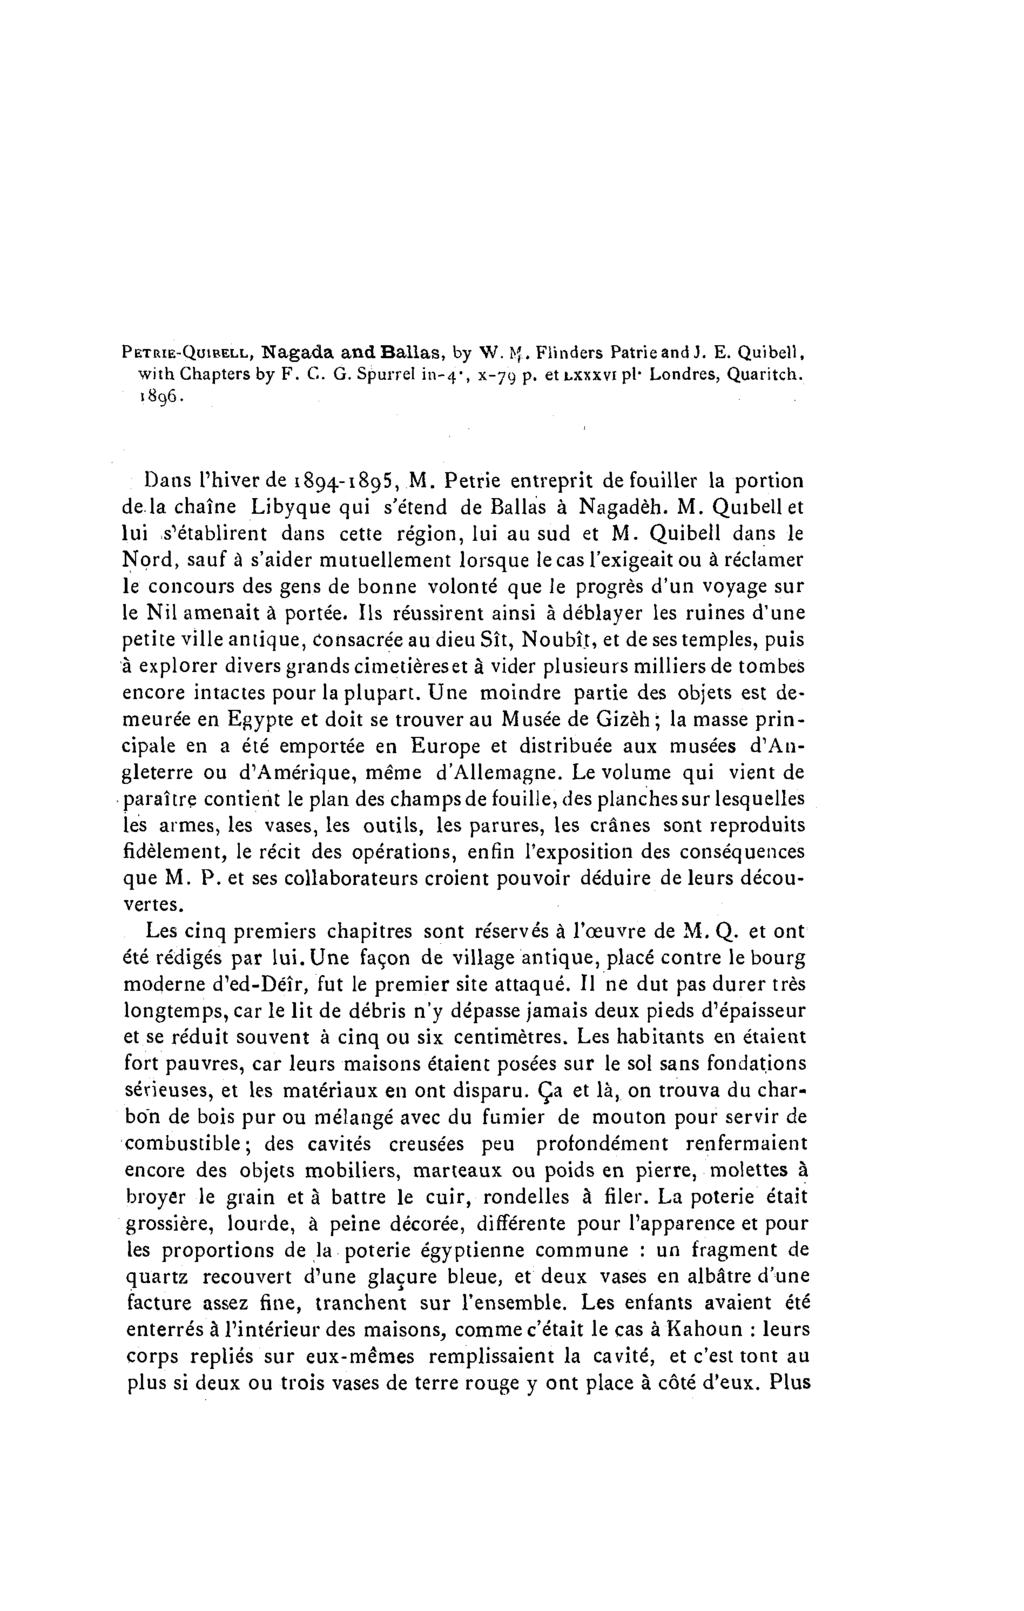 PETRIE-QUIRELL, Nagada and Ballas, by W. Pf. Flitiders Patrieand J. E. Quibell, w~th Chapters by F. C. G. Spurrel i11-4', x-79 p. et Lxxxvr pl. Londres, Quar~tch. 1896. Daus l'hiver de r 894-1895, M.